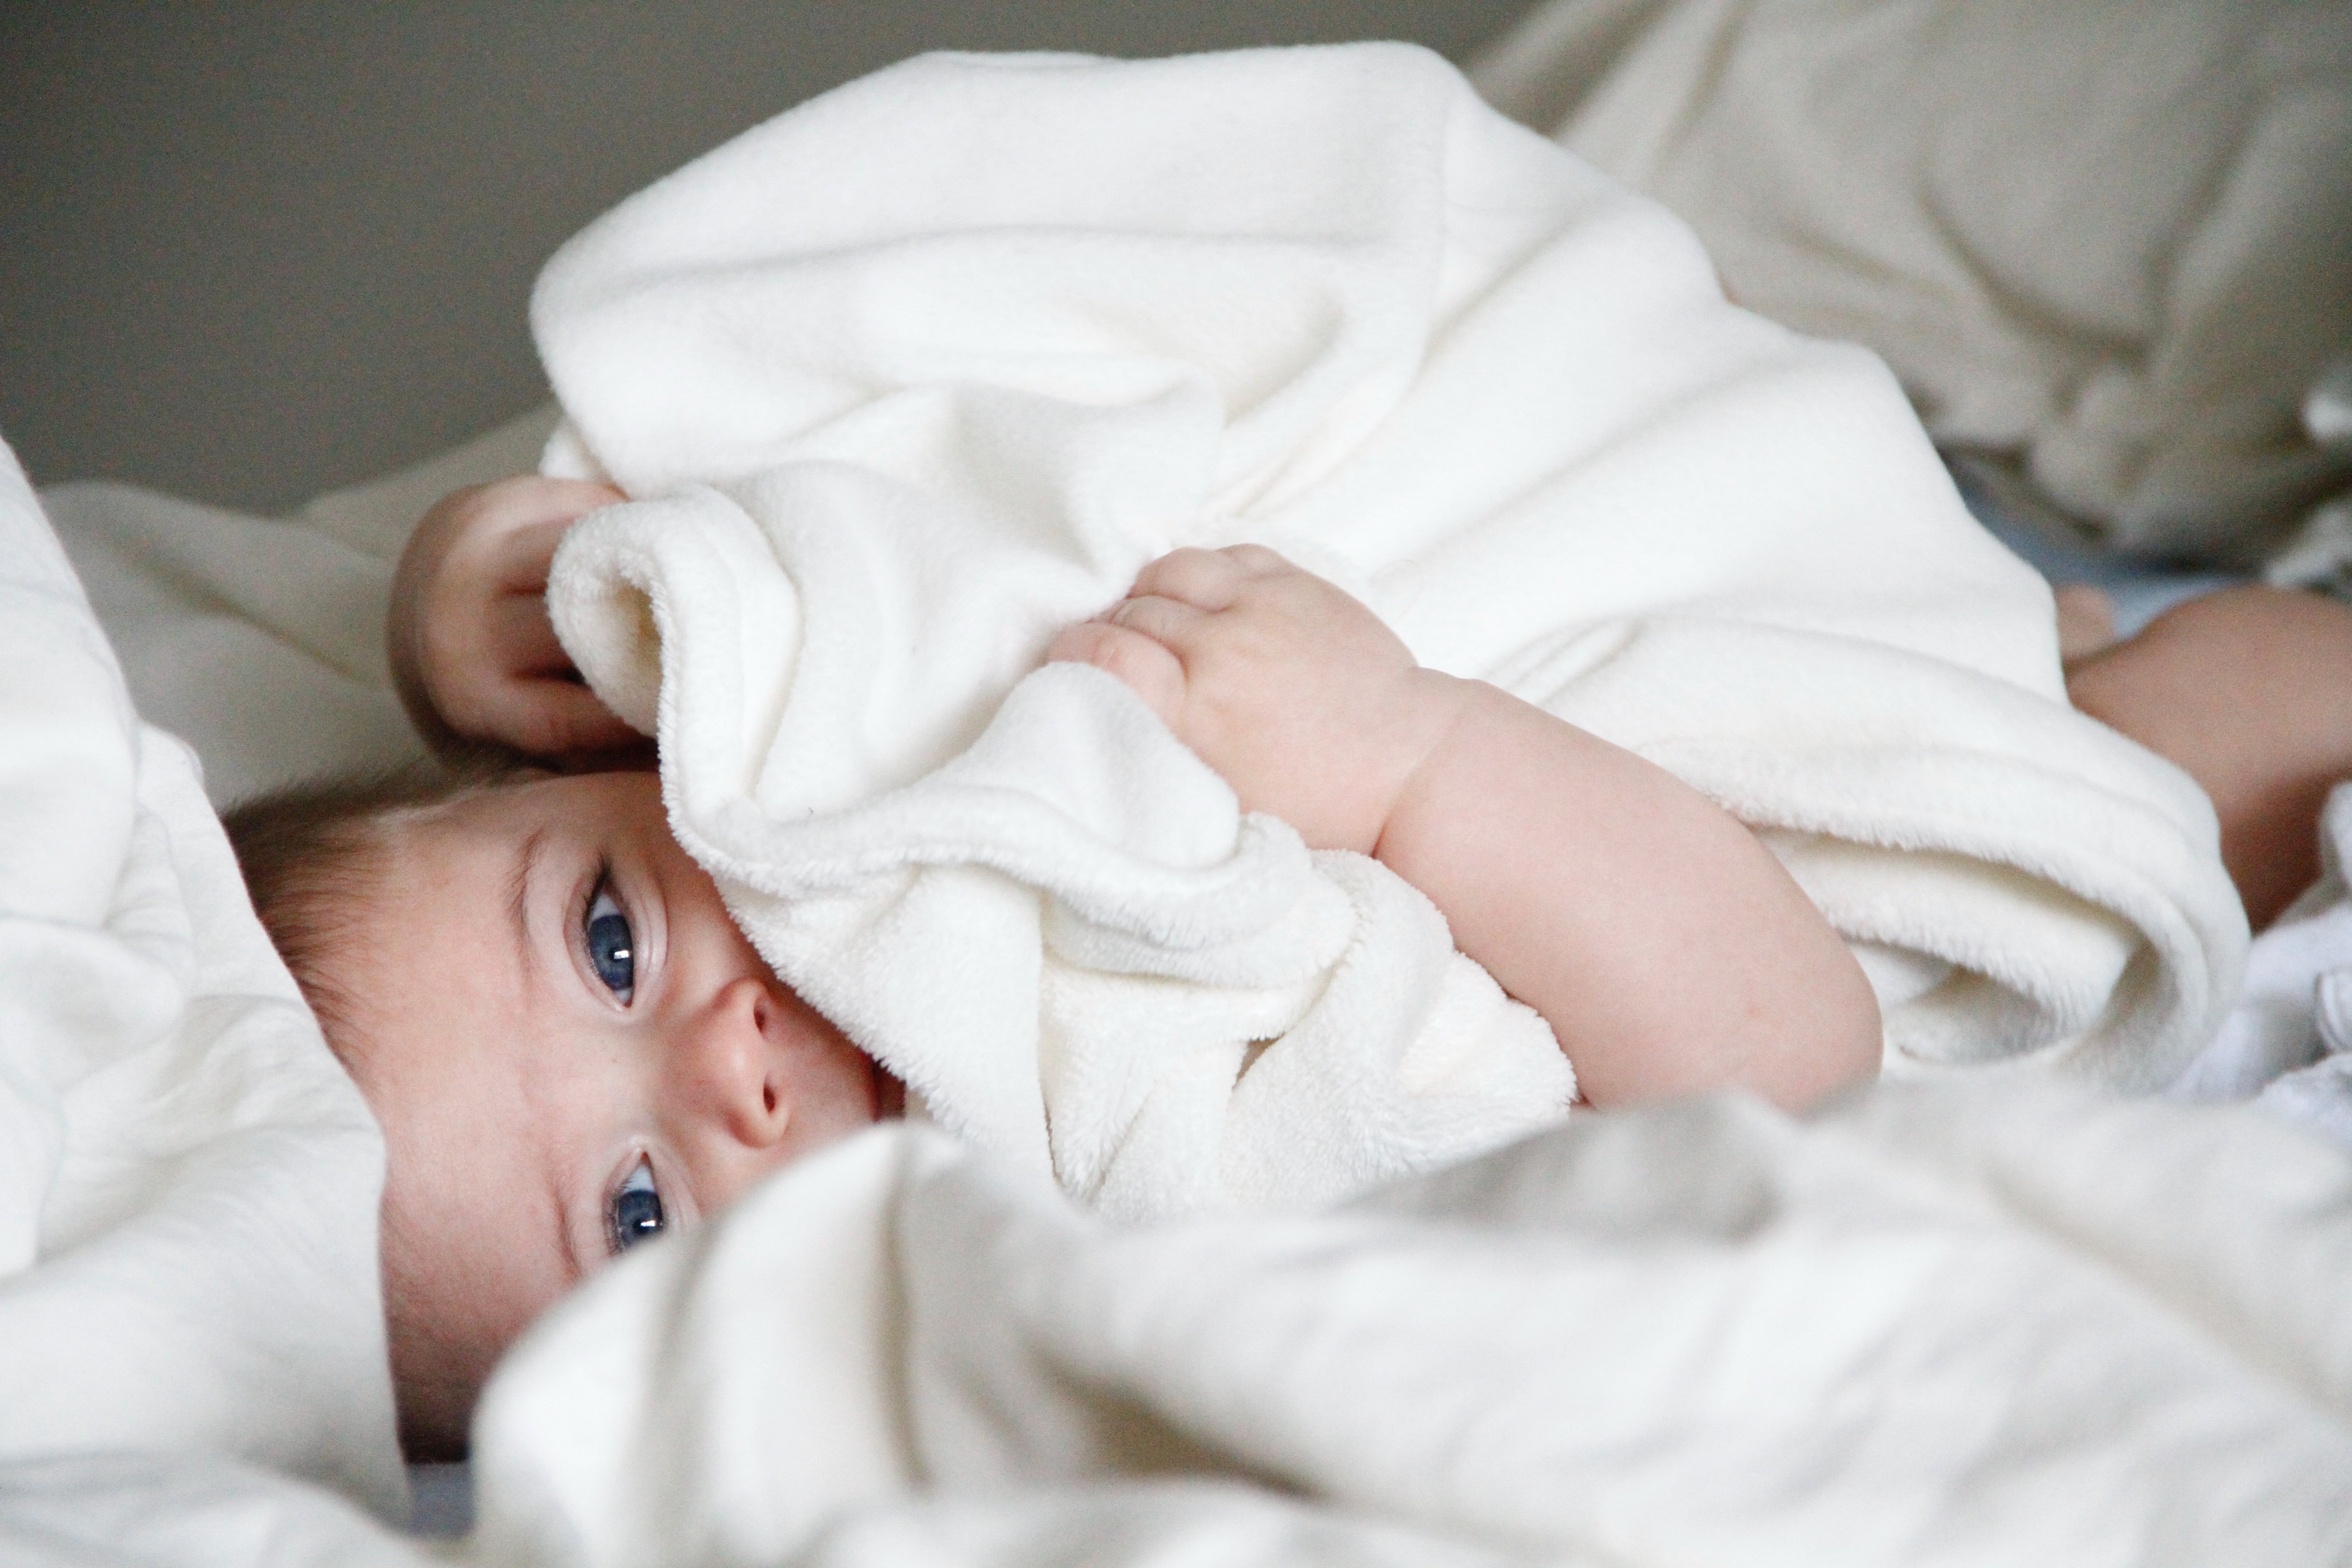 A joyous baby. | Source: Unsplash